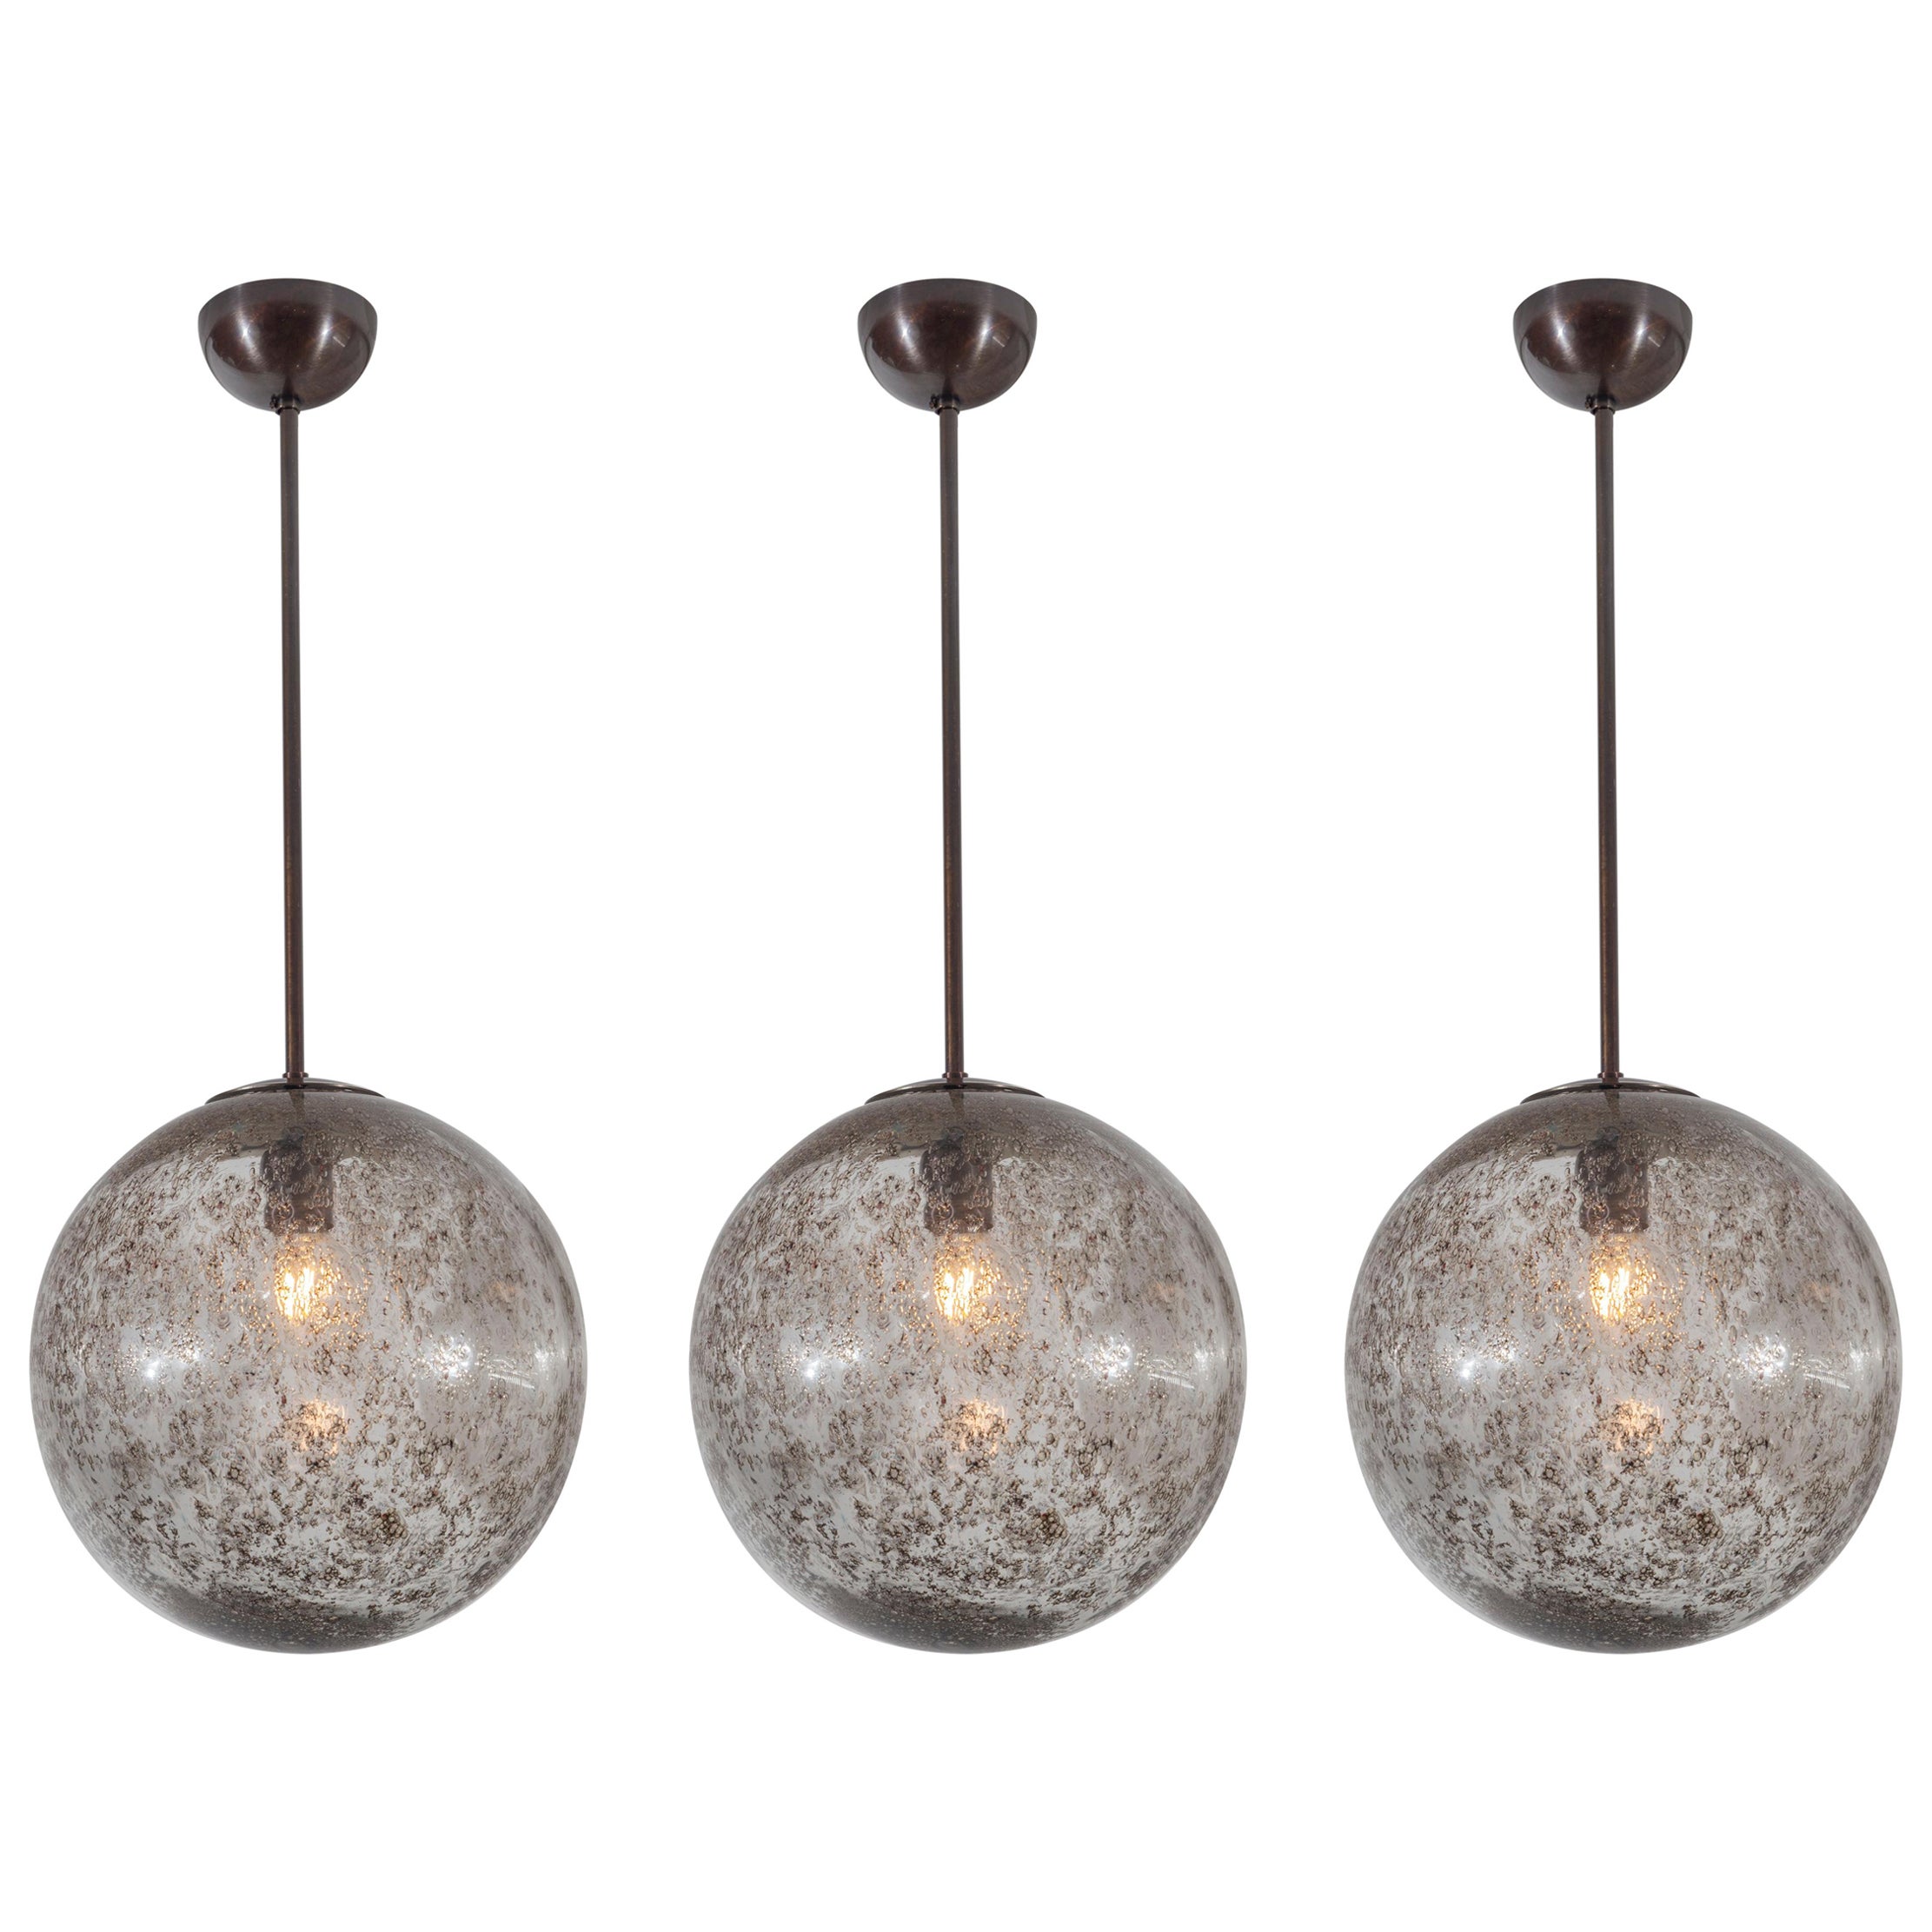 Set Of 3 Organic Modern Mottled Globe Lights, Contemporary 